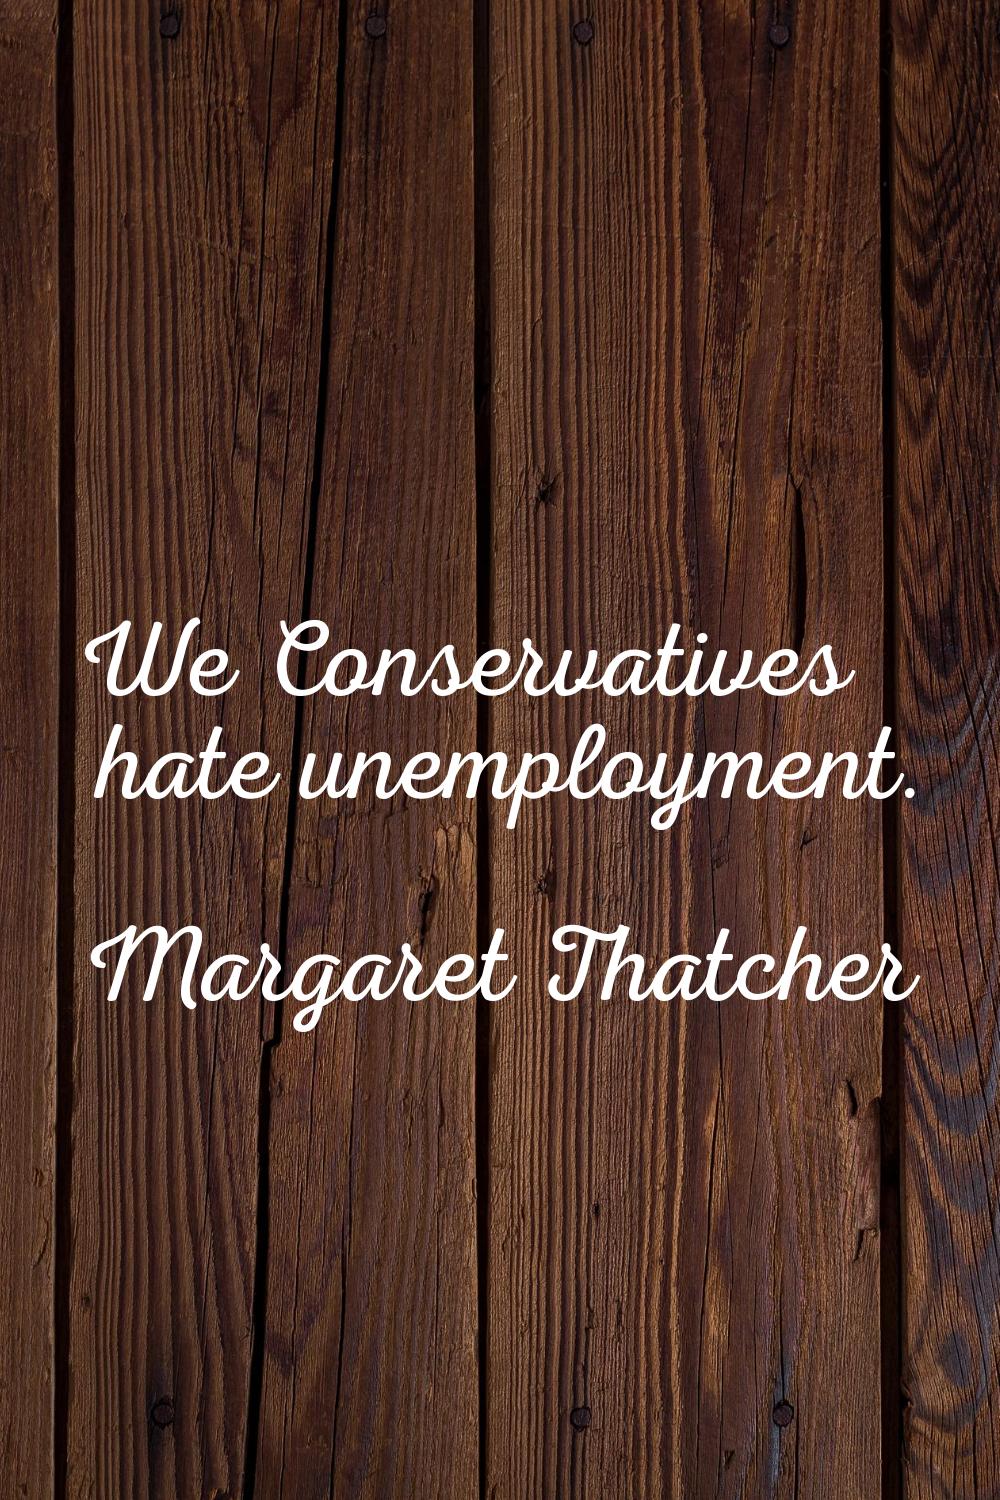 We Conservatives hate unemployment.